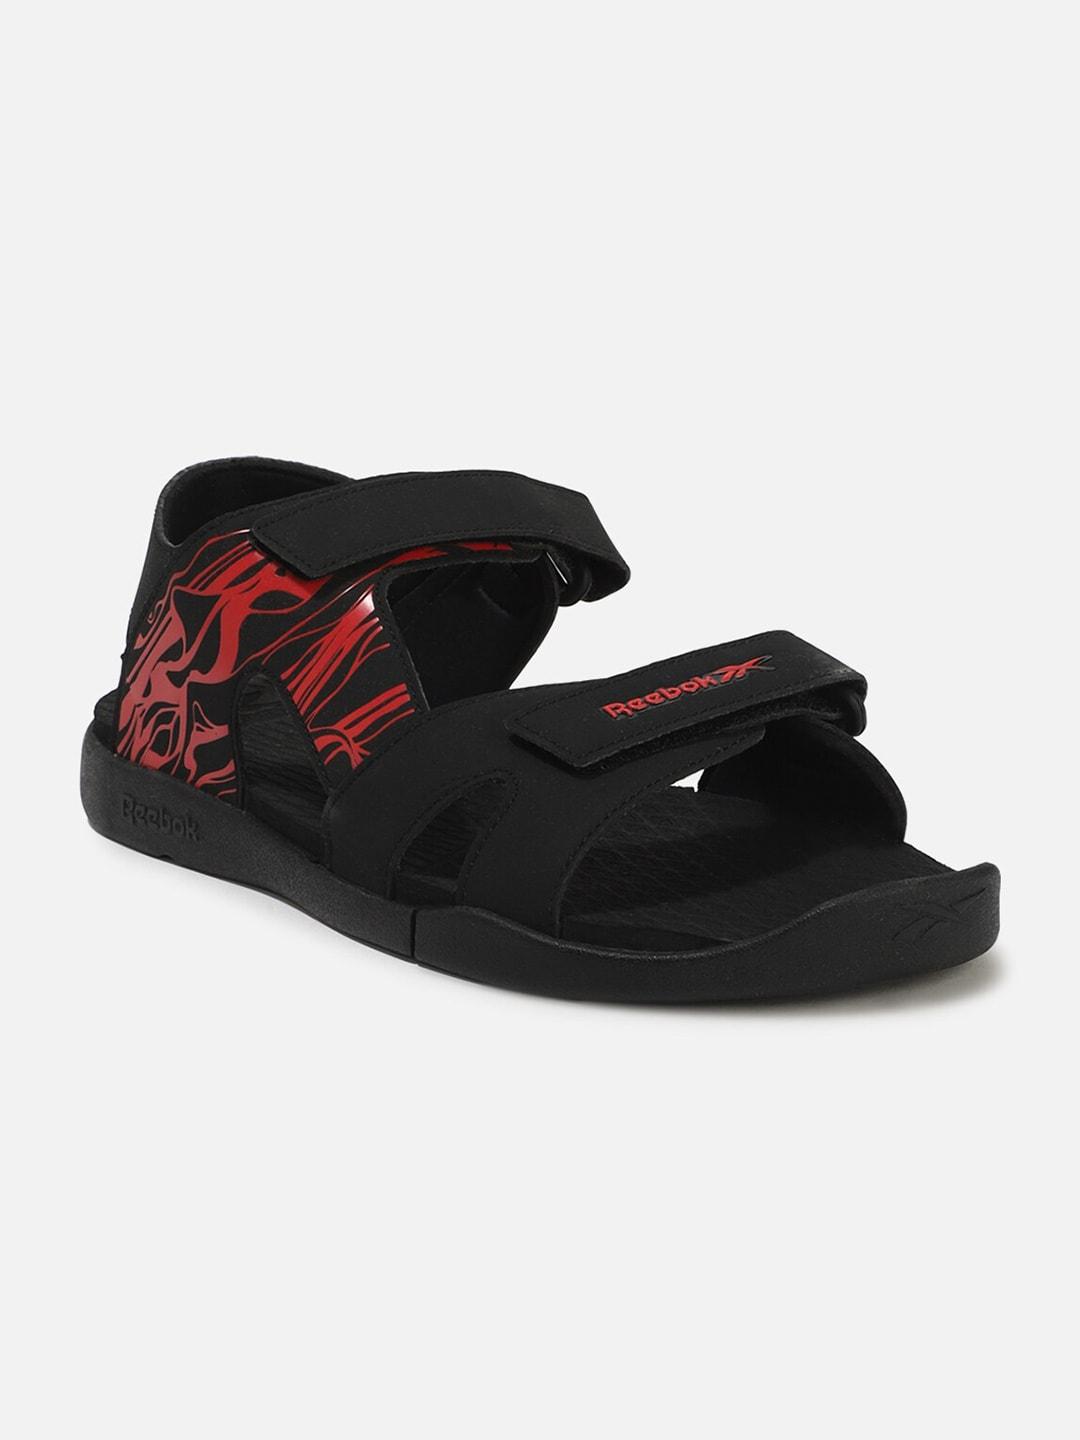 Reebok Men Ezra Sports Sandals